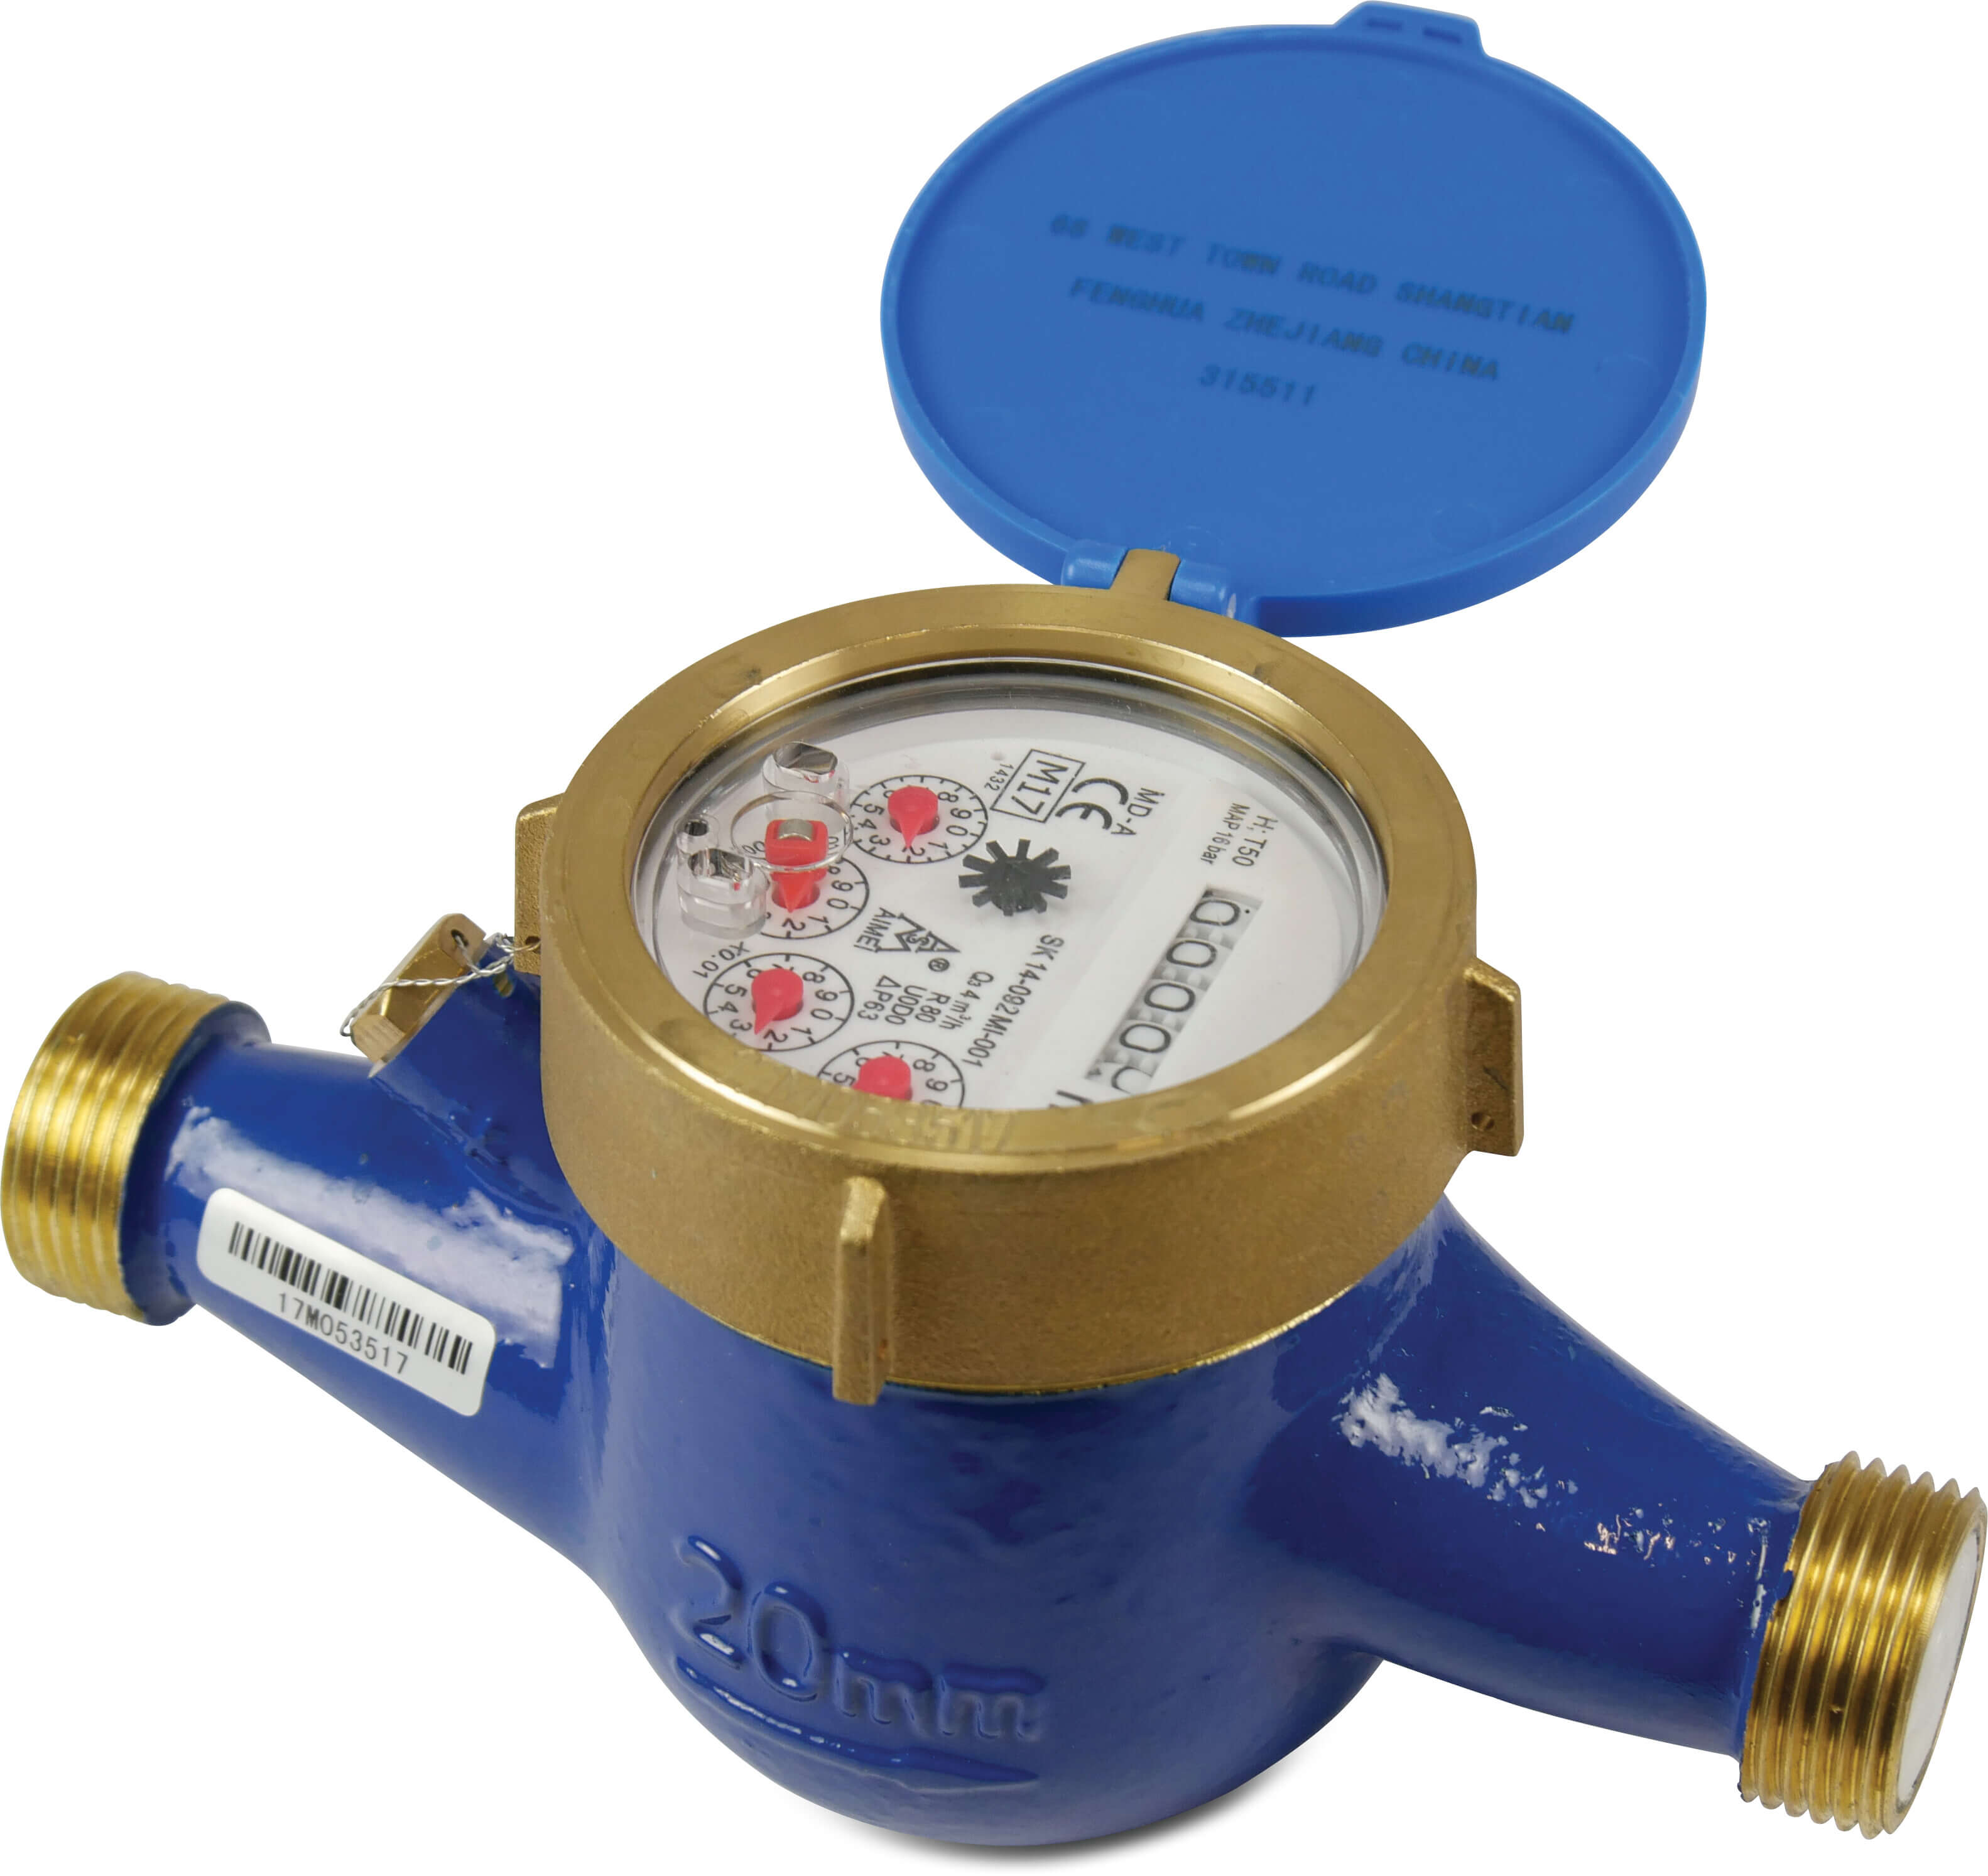 Profec Water meter dry, TL multi jet horizontal with pulse option